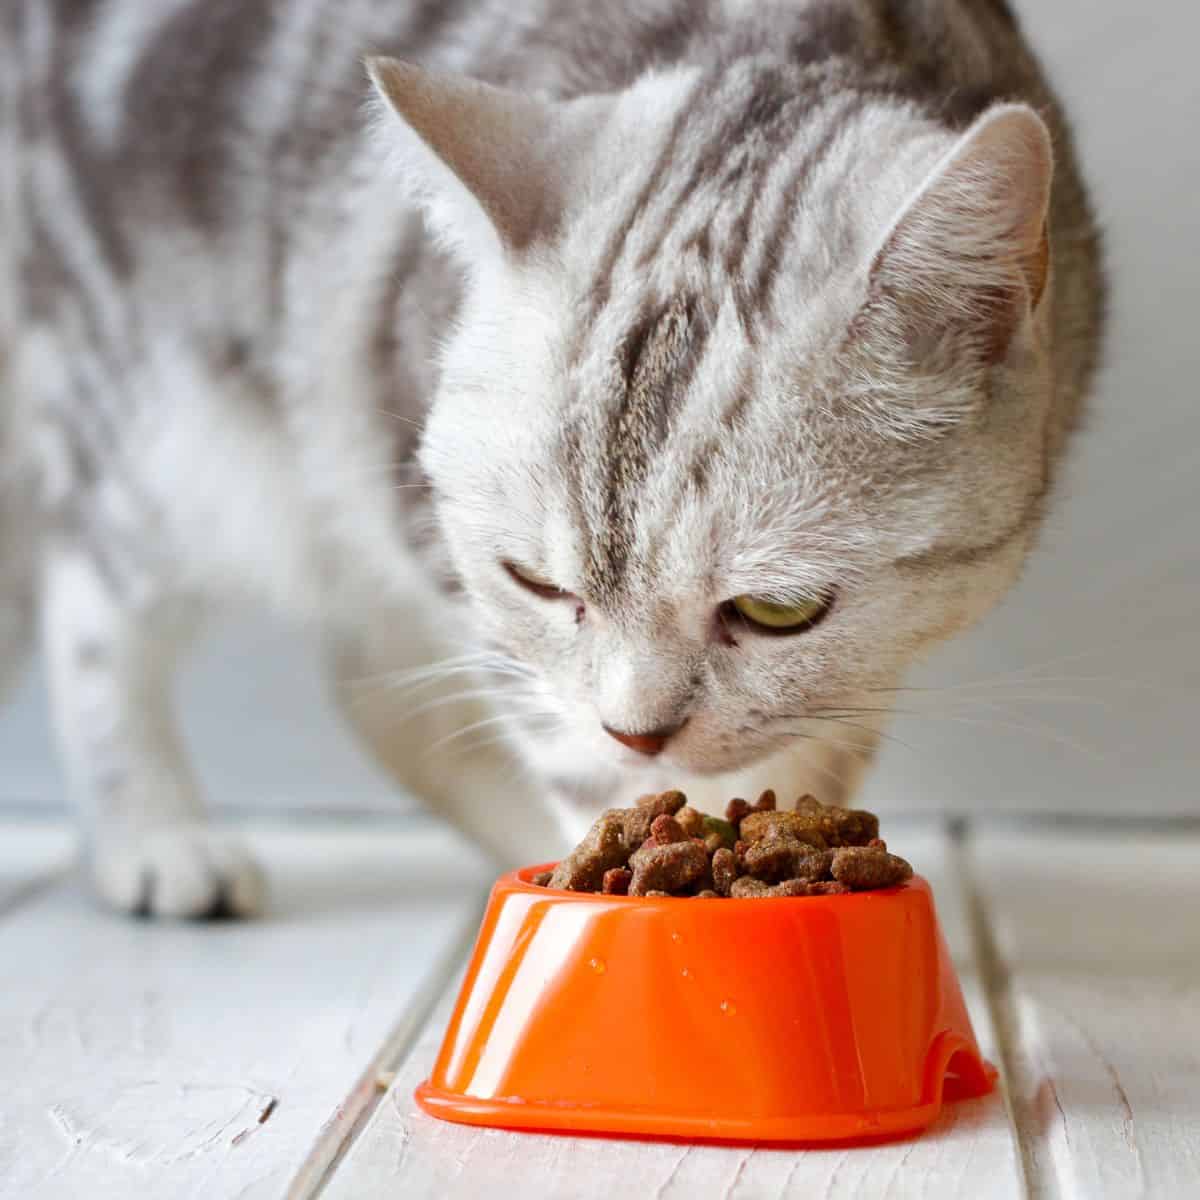 cat sniffing food in an orange bowl